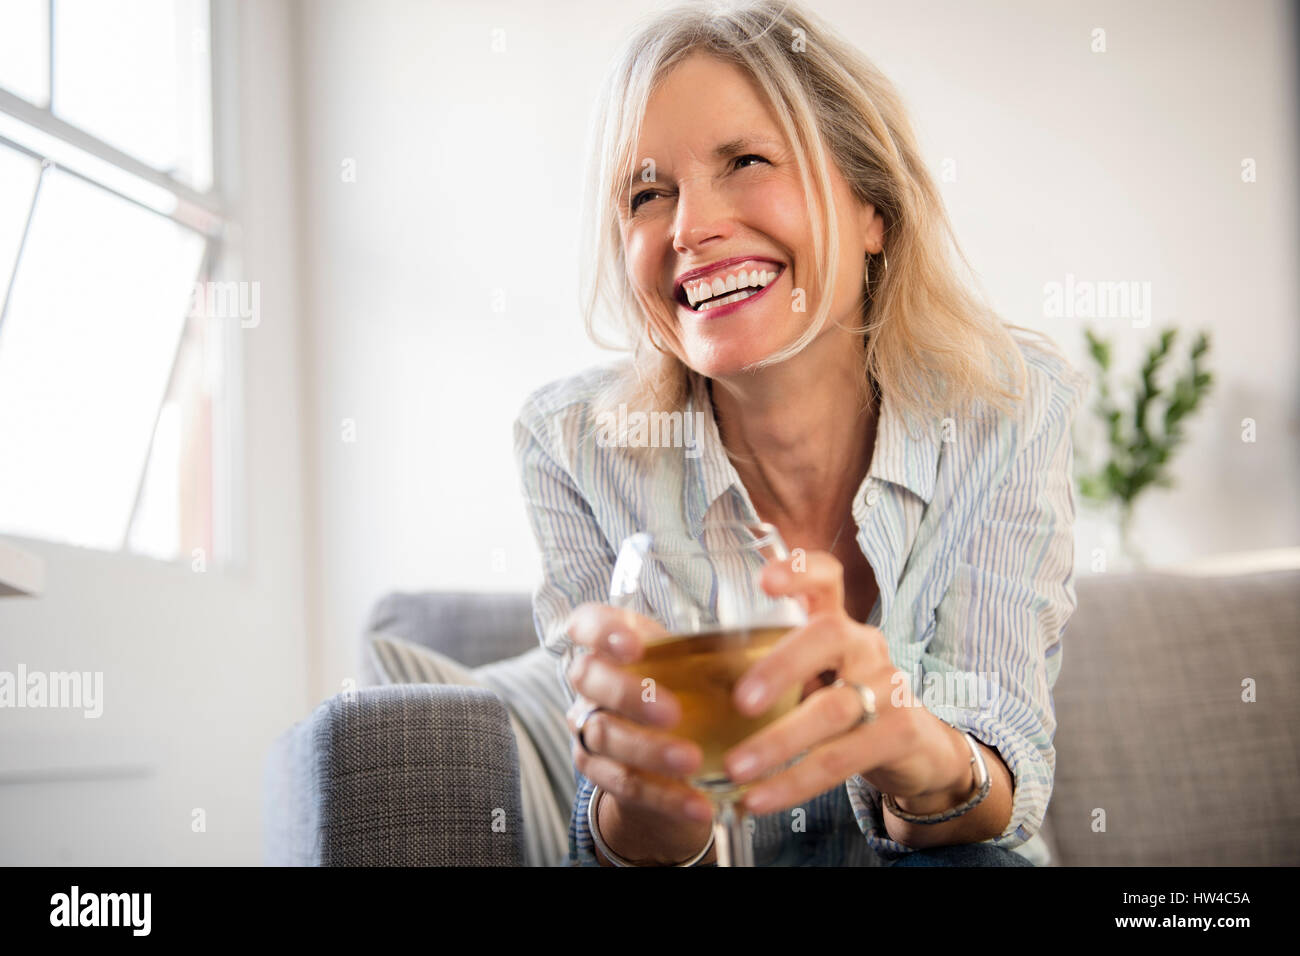 Smiling Caucasian woman sitting on sofa drinking white wine Stock Photo